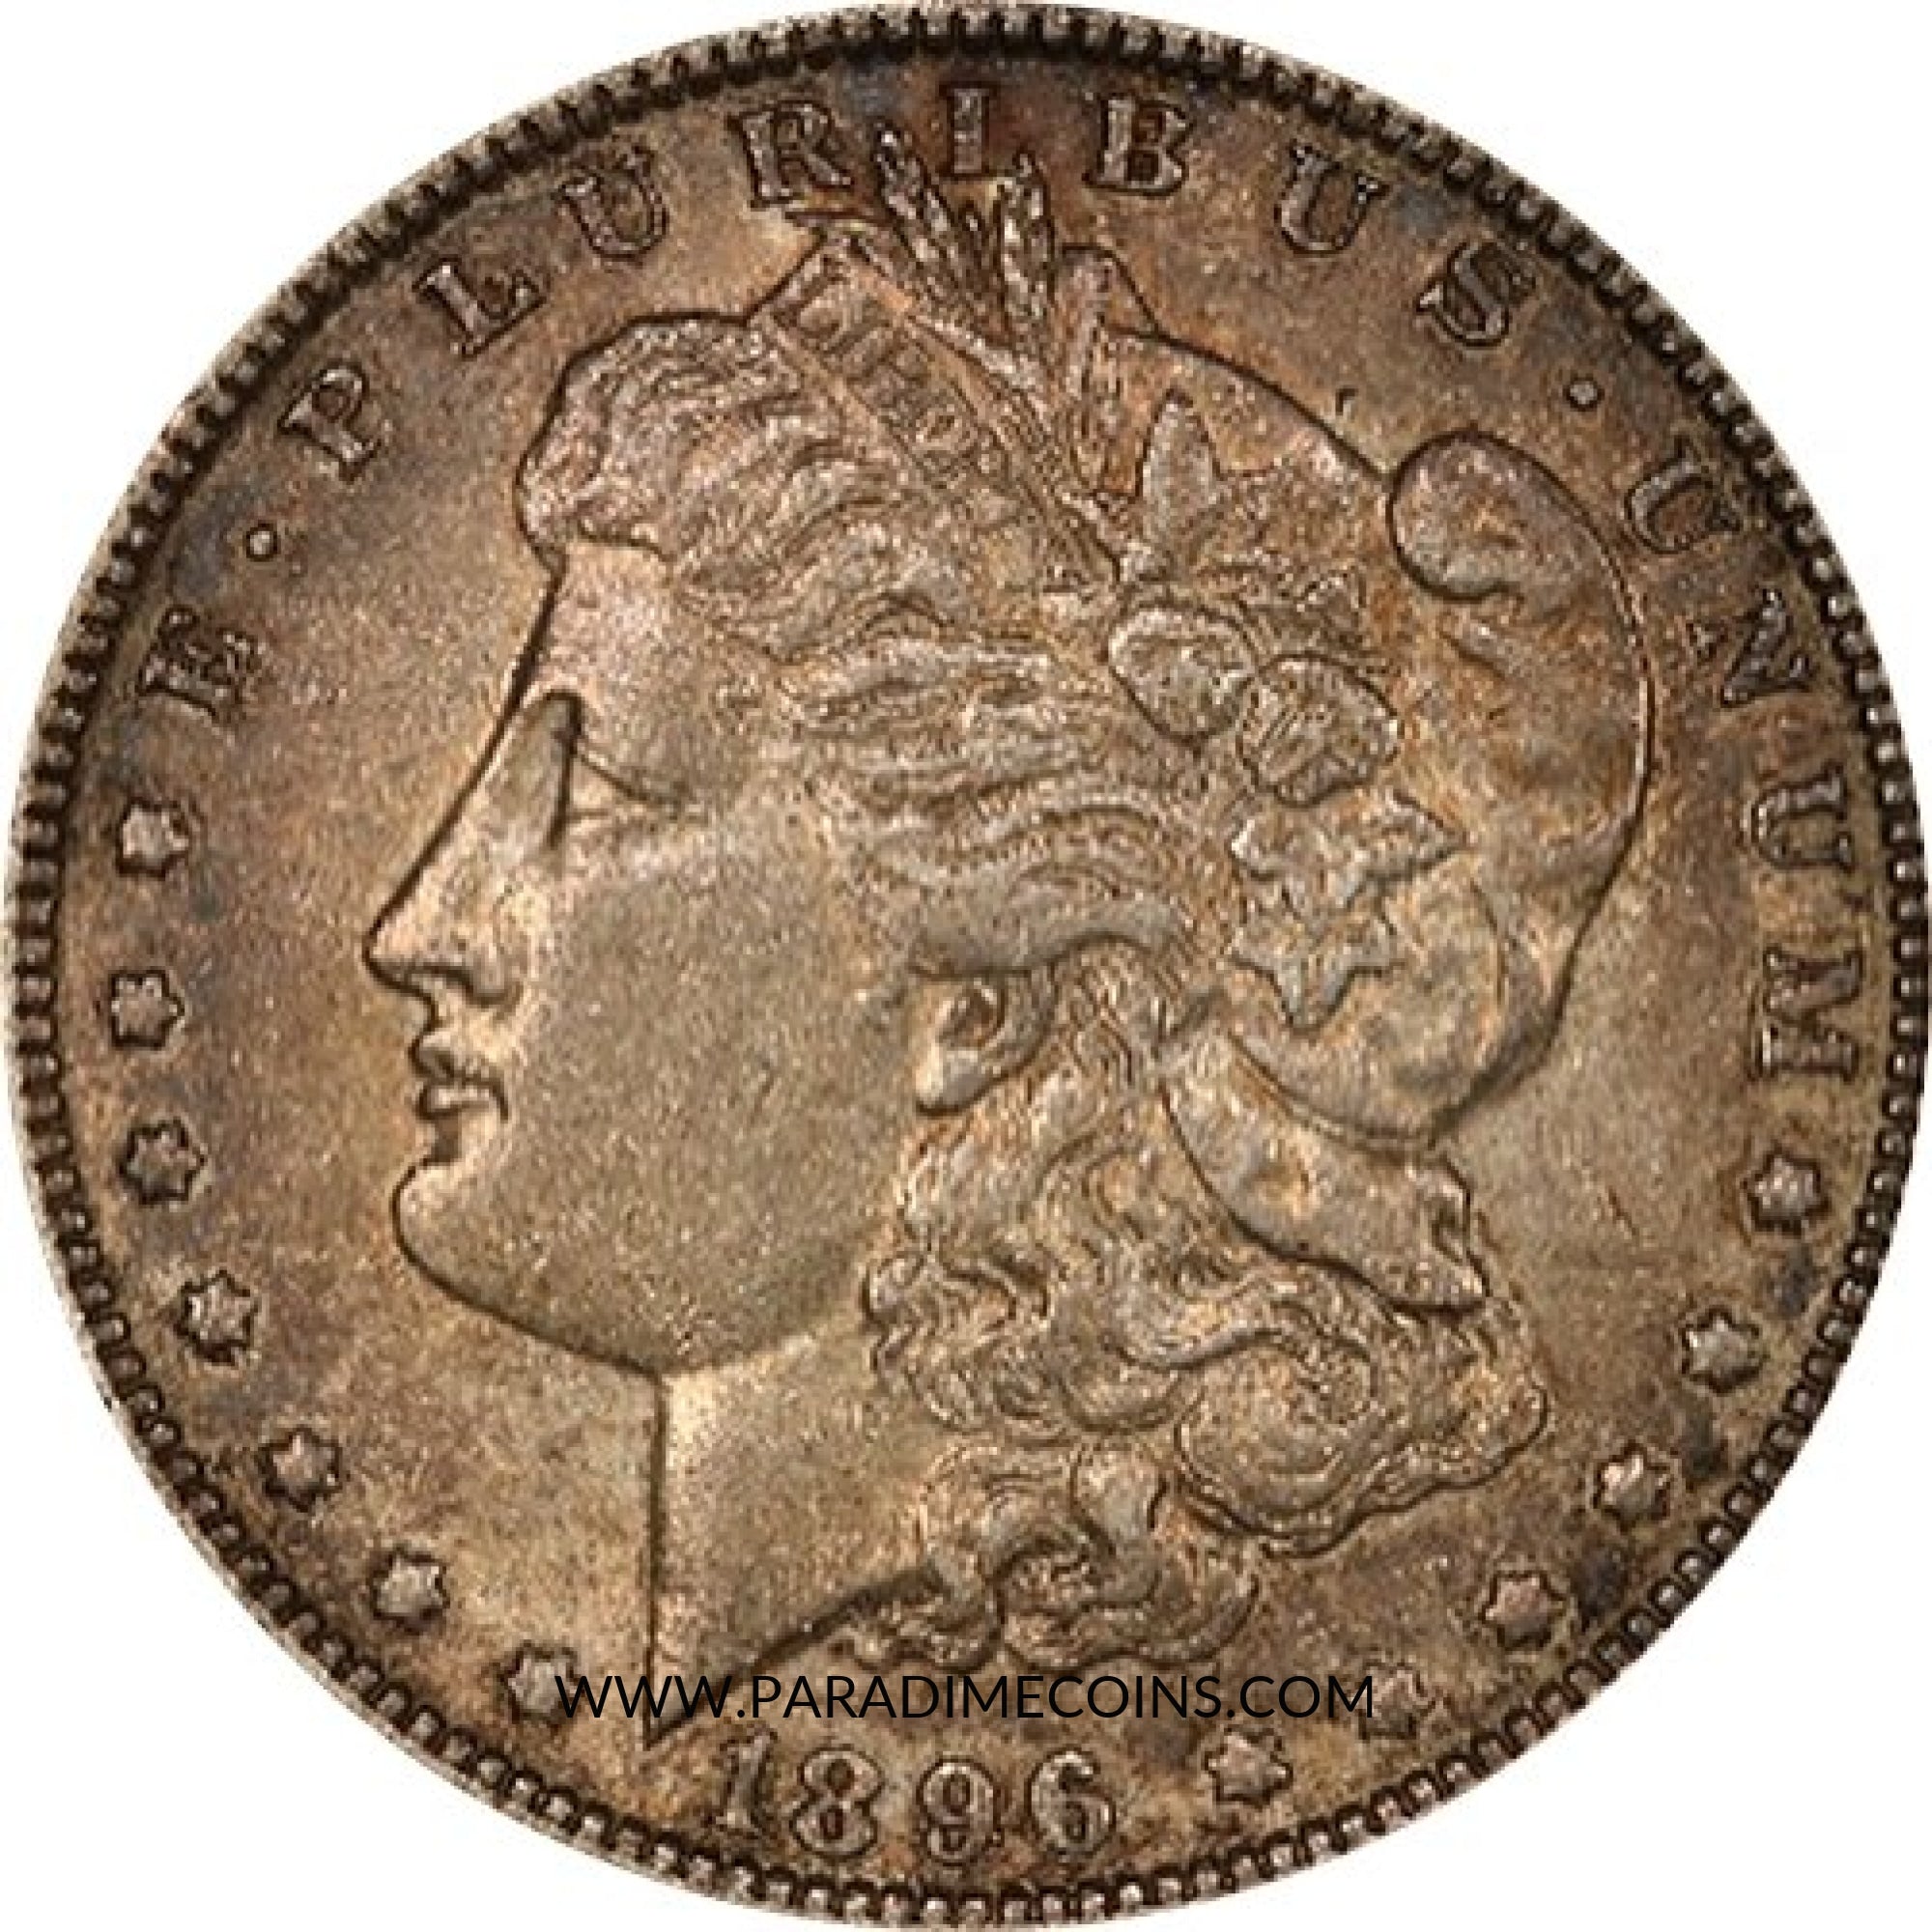 1896-O $1 AU50 PCGS - Paradime Coins US Coins For Sale